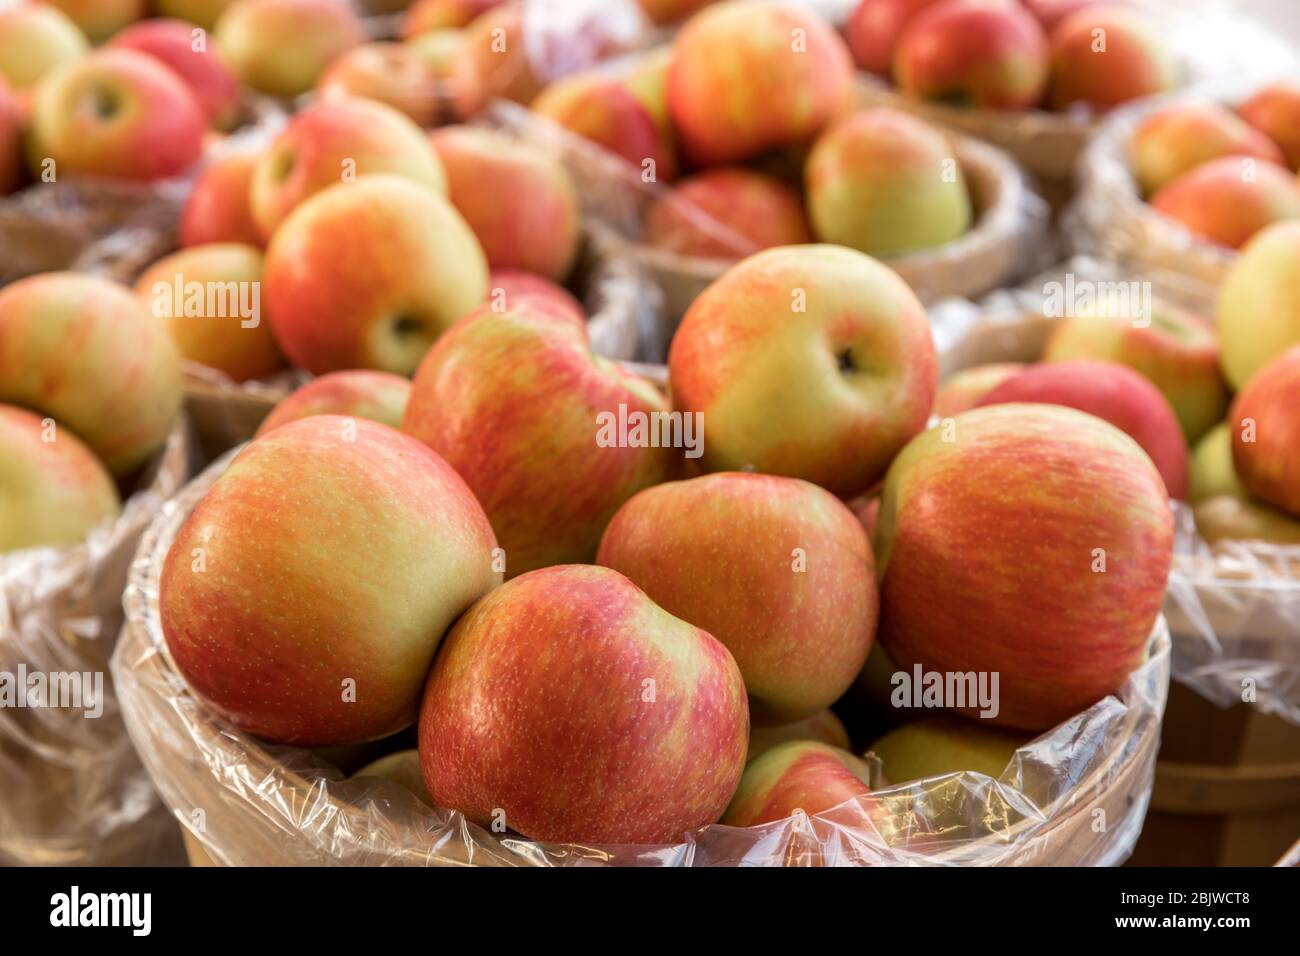 Bushel basket of apples Stock Photo